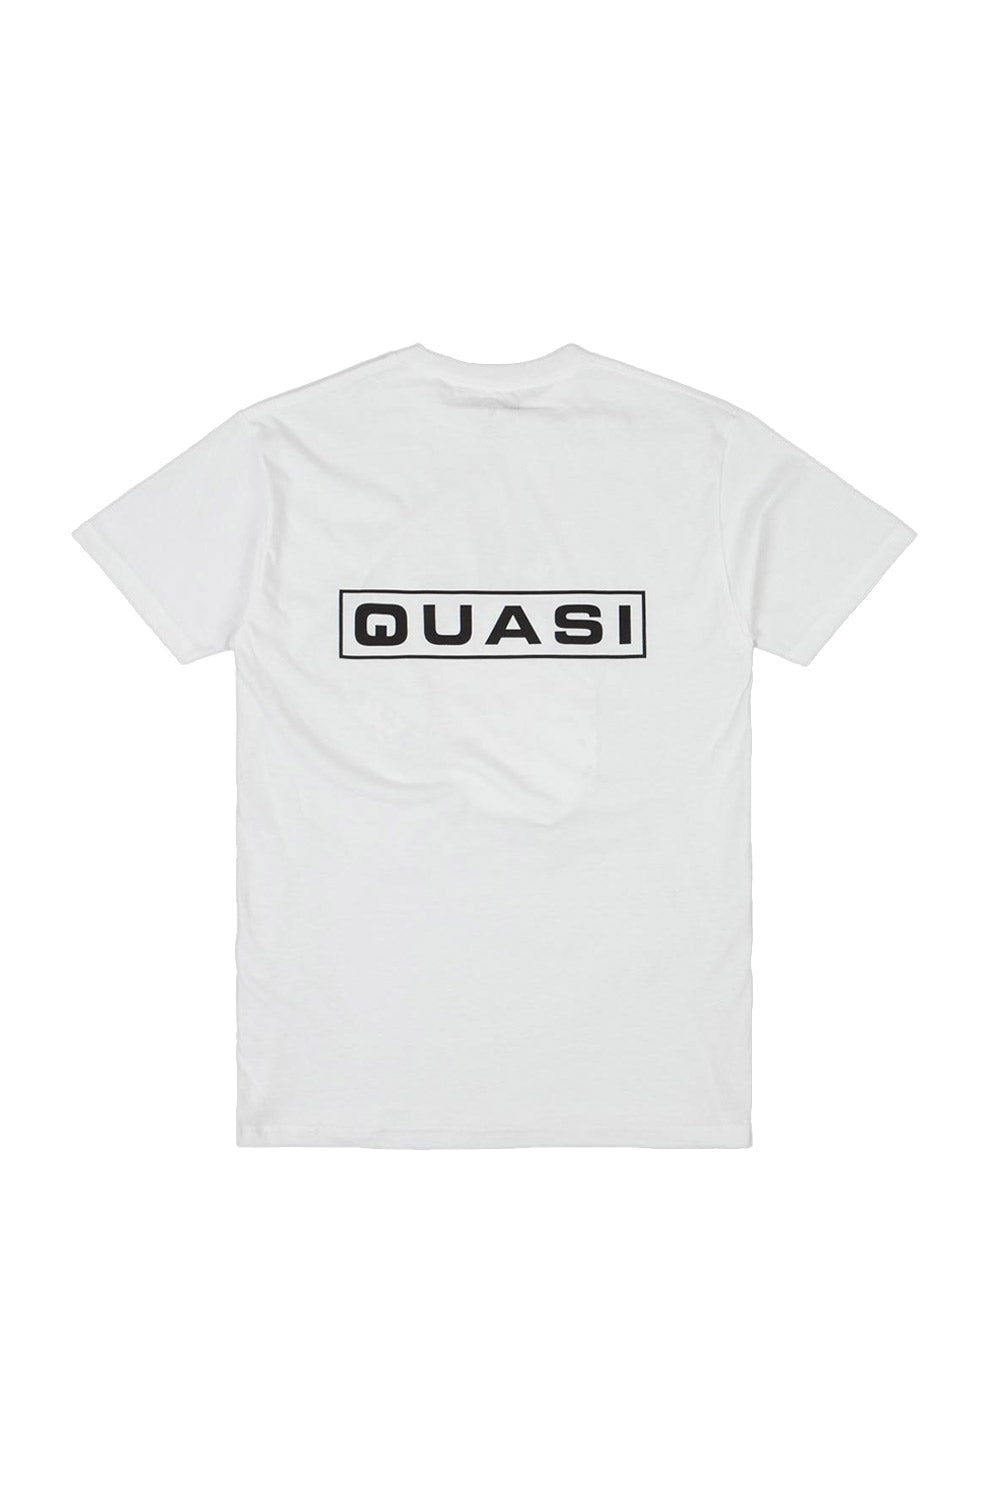 Quasi Hothand T-Shirt